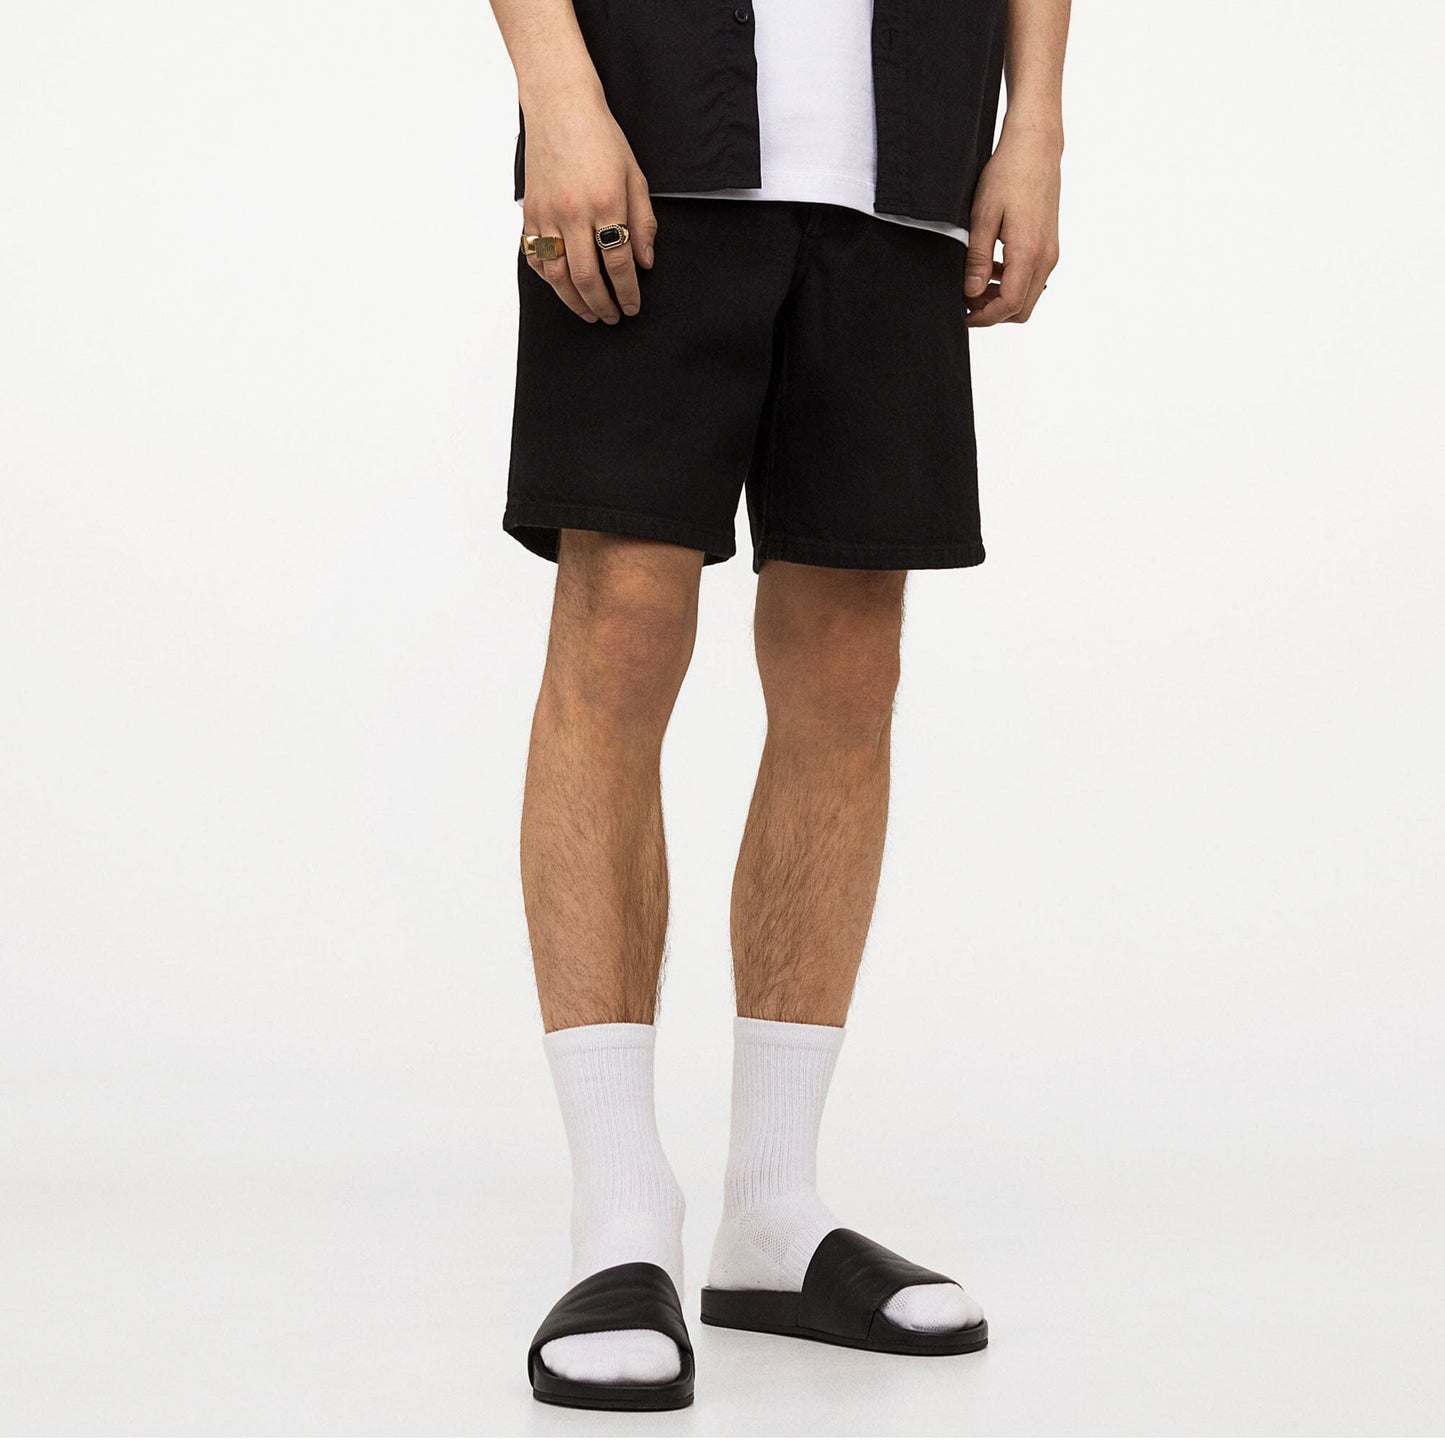 Anko Men's Slim Denim Shorts Men's Shorts Ril SMC Charcoal 26 18